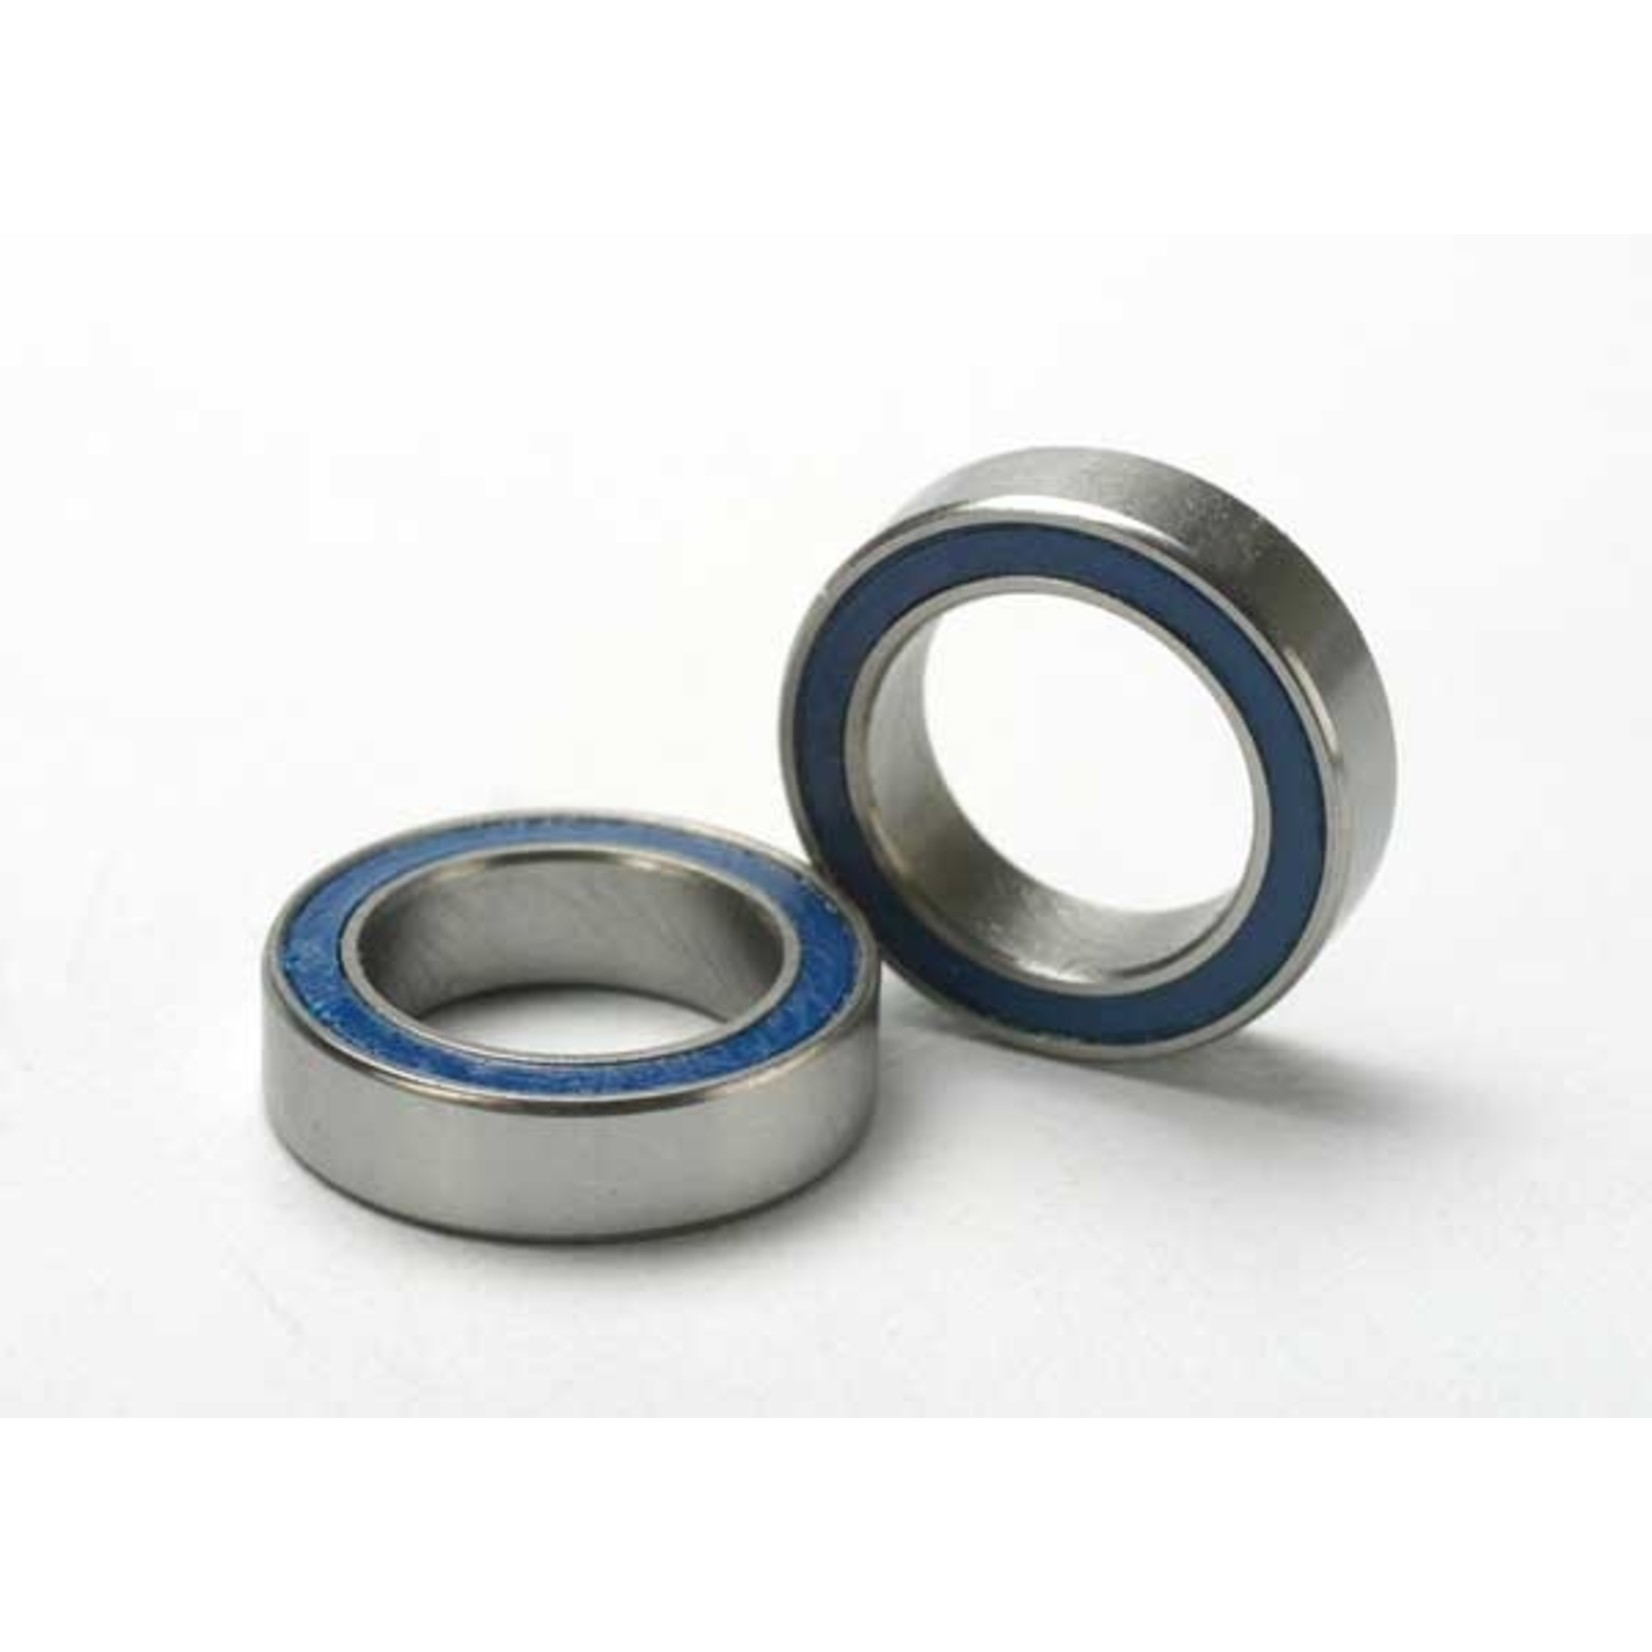 Traxxas 5119 - Ball bearings, blue rubber sealed (10x15x4mm) (2)